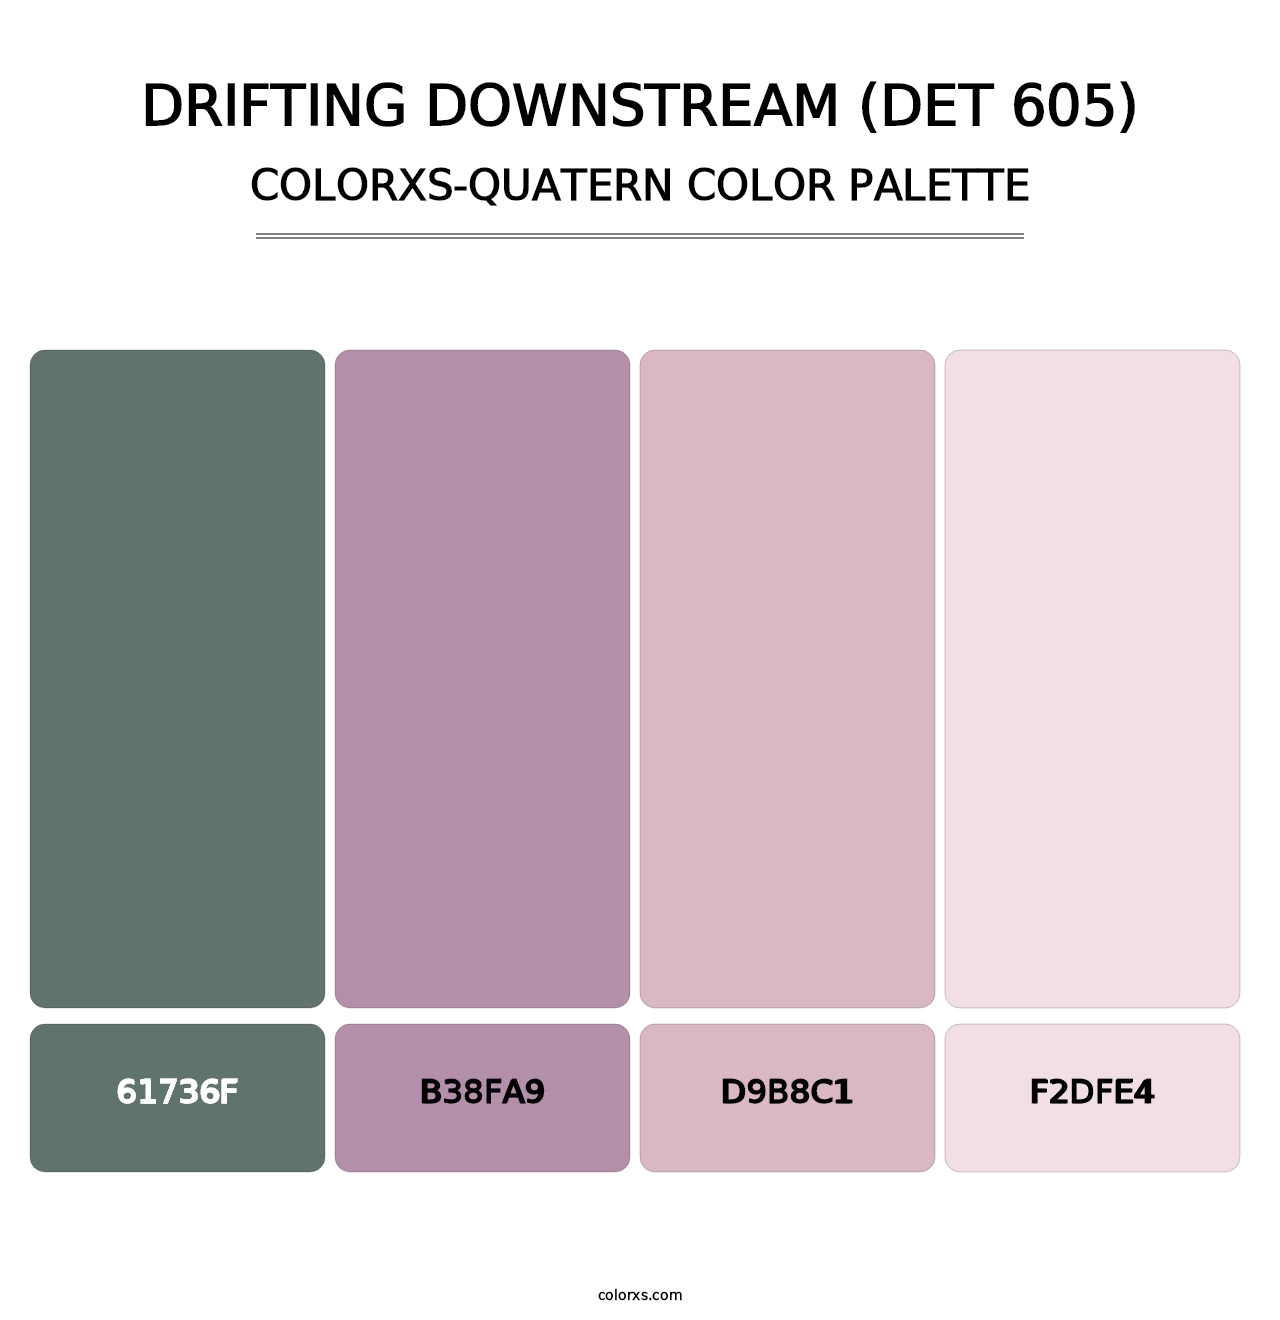 Drifting Downstream (DET 605) - Colorxs Quatern Palette